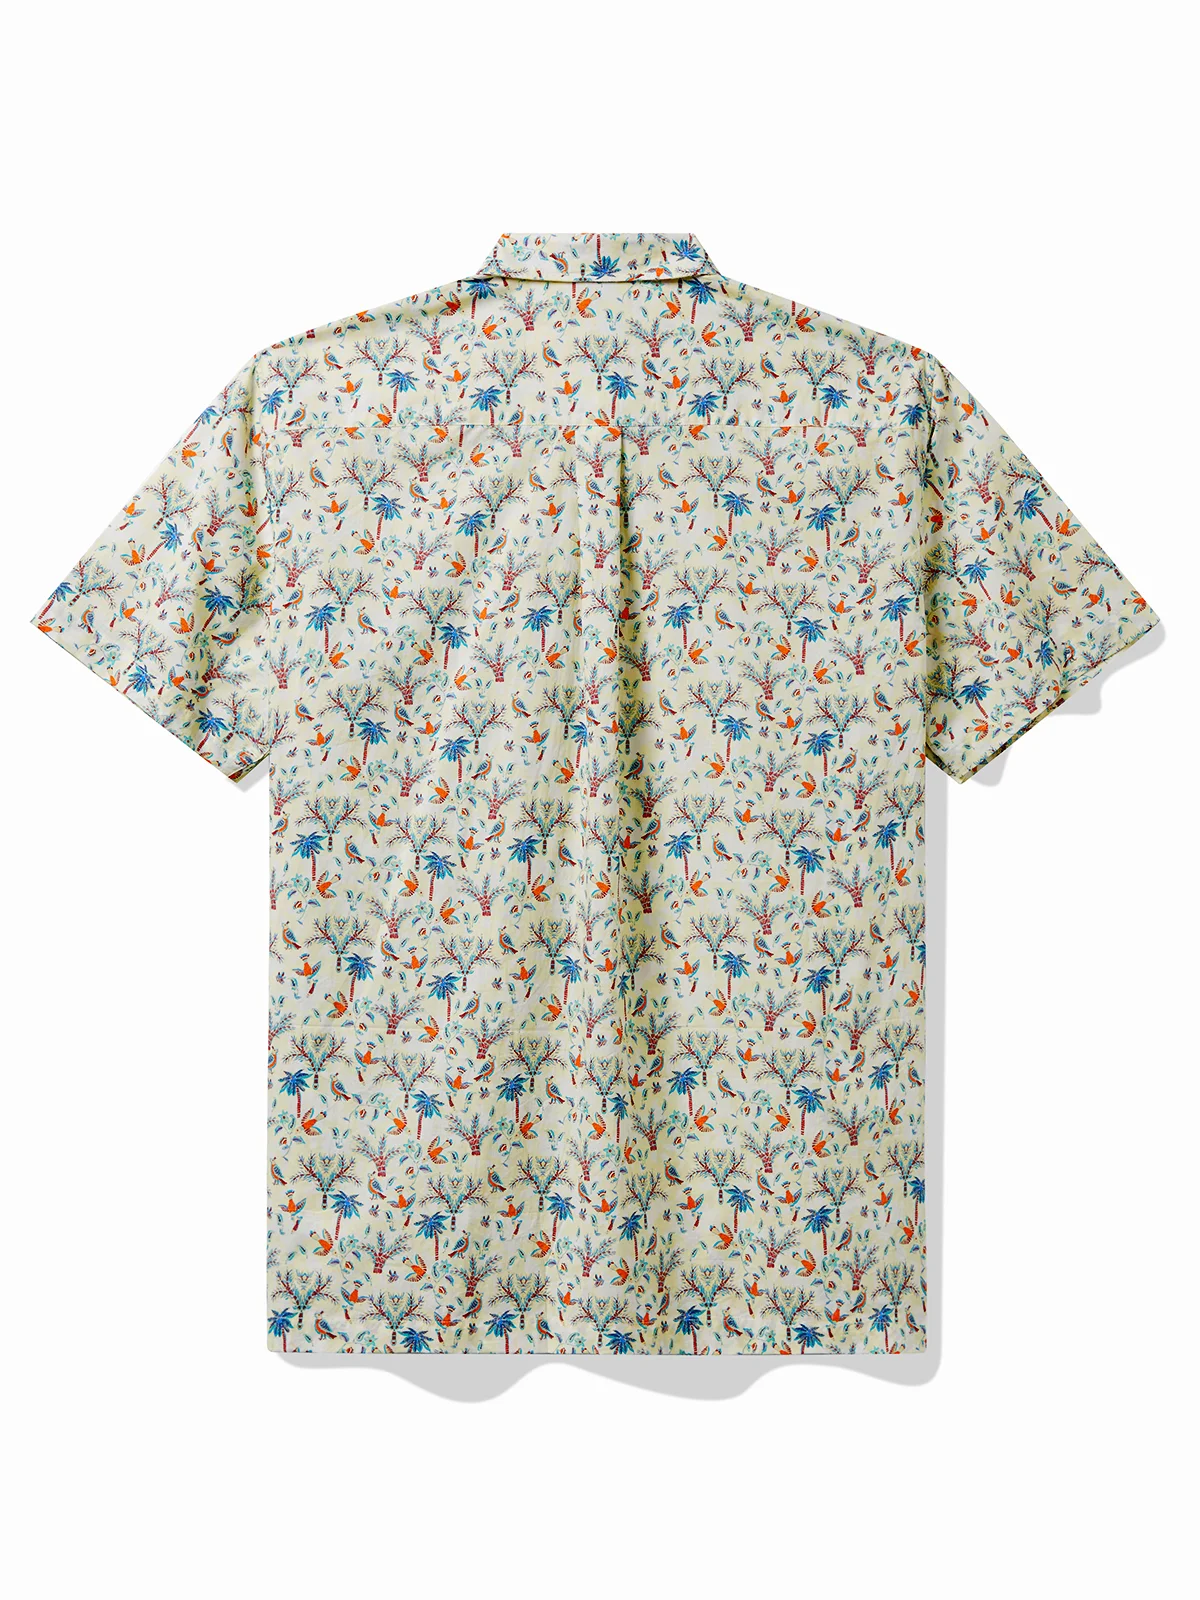 Royaura® Cotton Beach Vacation Men's Hawaiian Shirt Hala Tree Pocket Camp Button-Down Shirt Big Tall